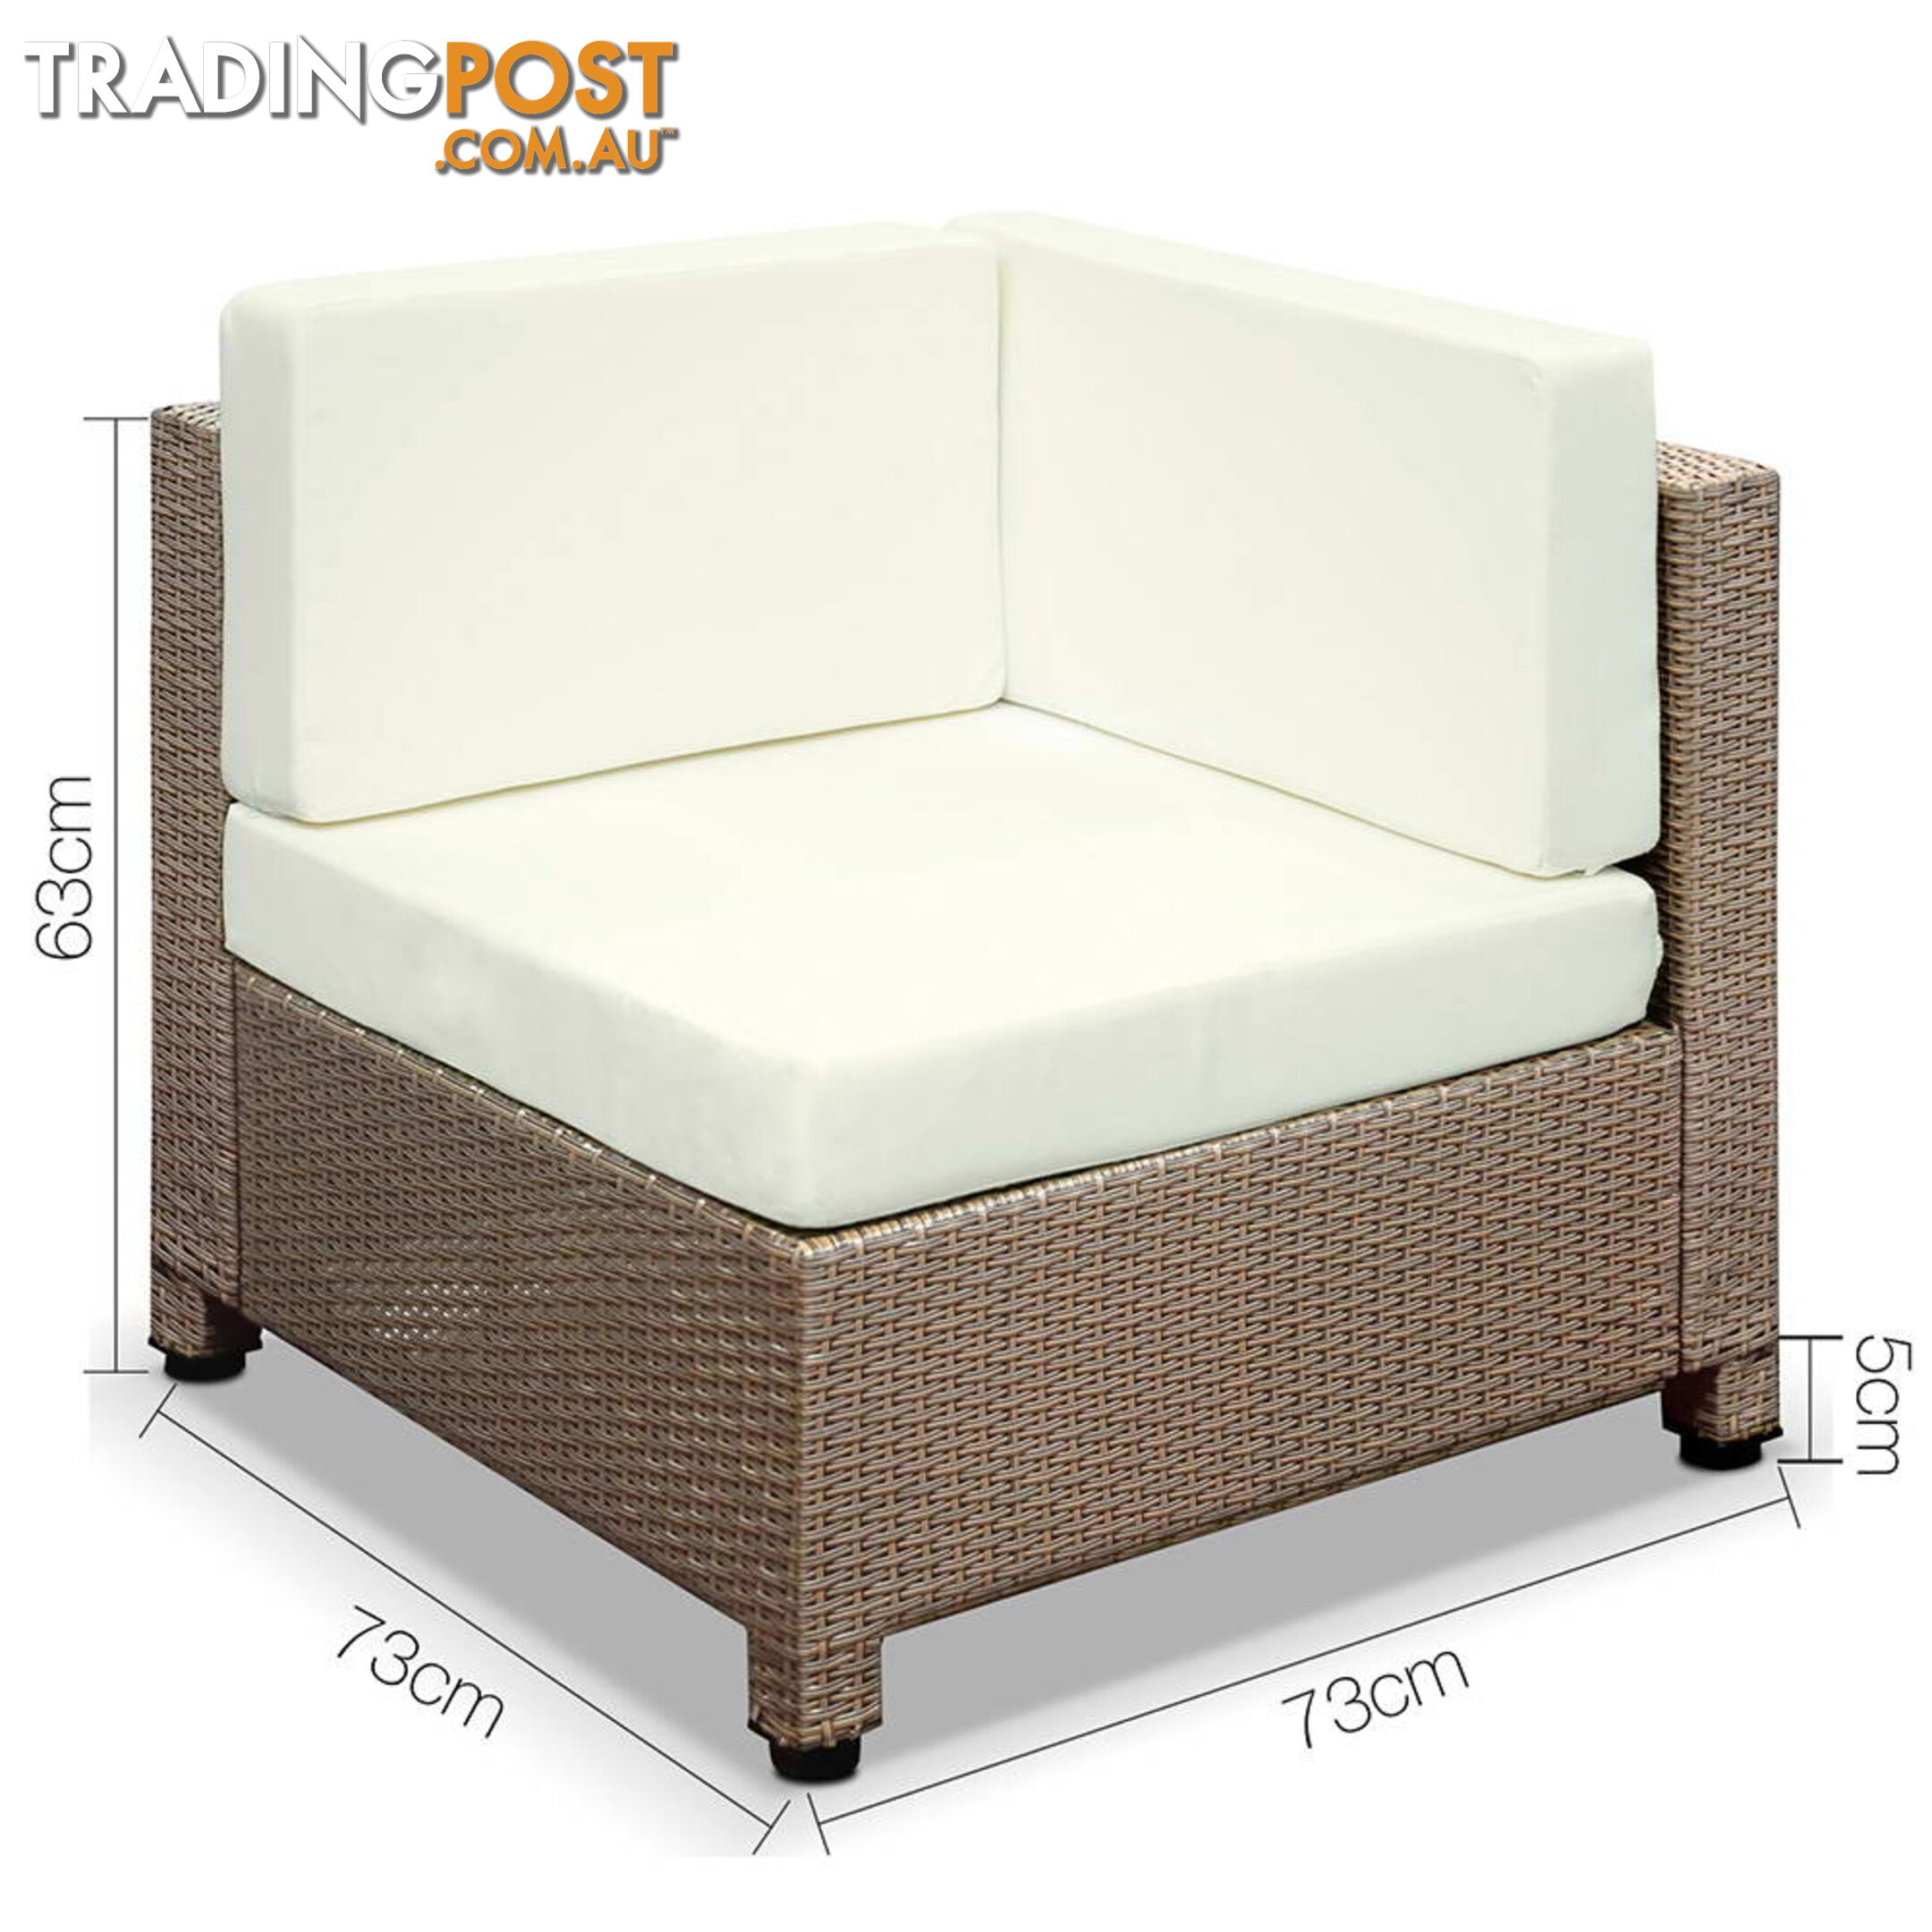 Outdoor Lounge 4 Seater Garden Furniture Wicker 5pcs Rattan Sofa Setting Beige